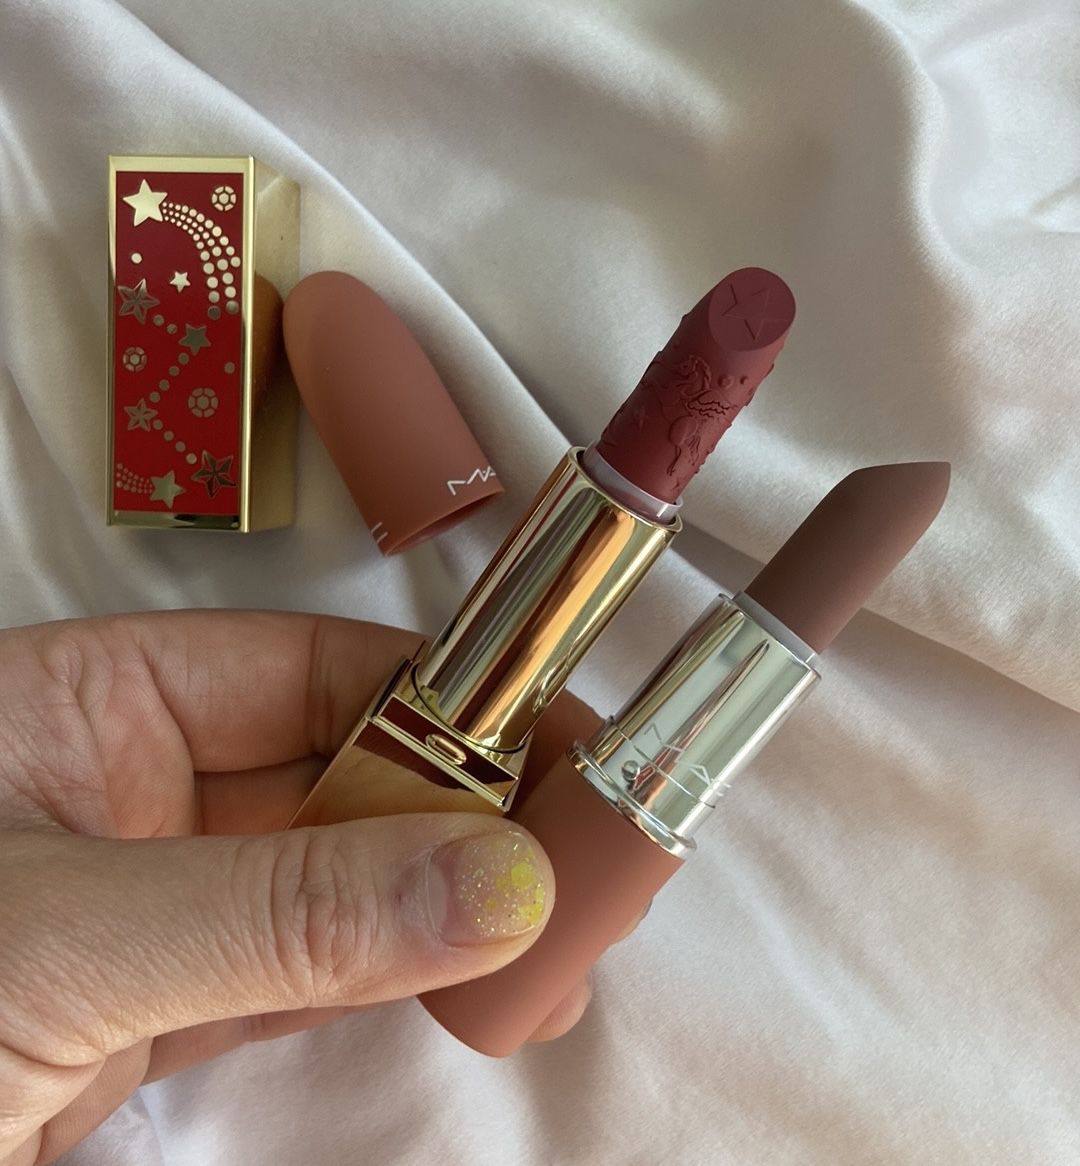 Estée Lauder & Mac lipstick bundle